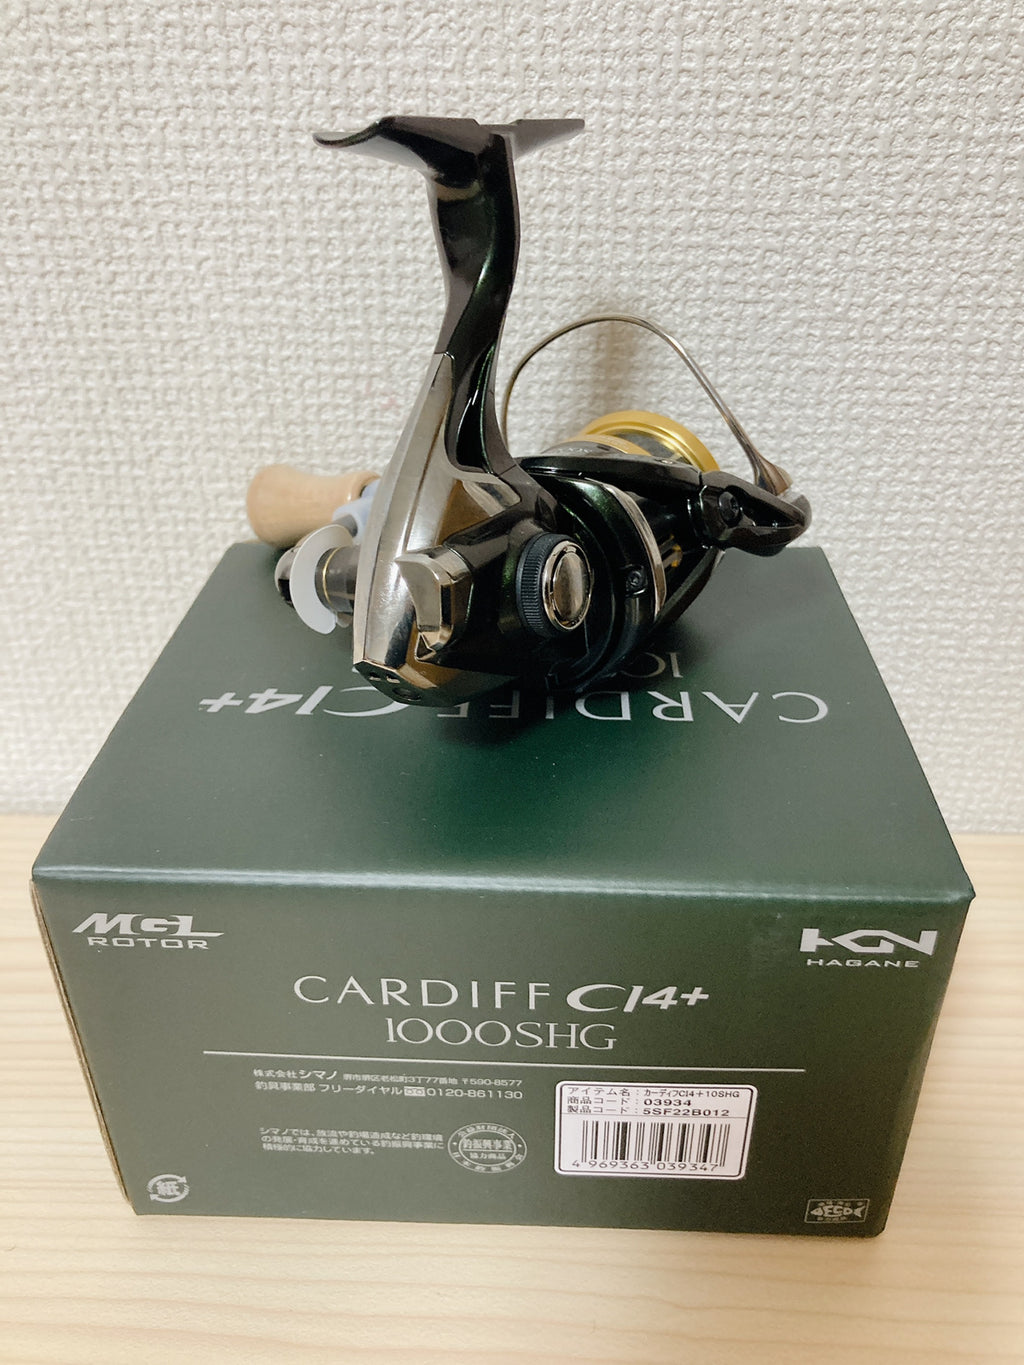 Shimano Spinning Reel trout 18 CARDIFF CI4+ 1000SHG 6.0:1 Fishing Reel IN  BOX